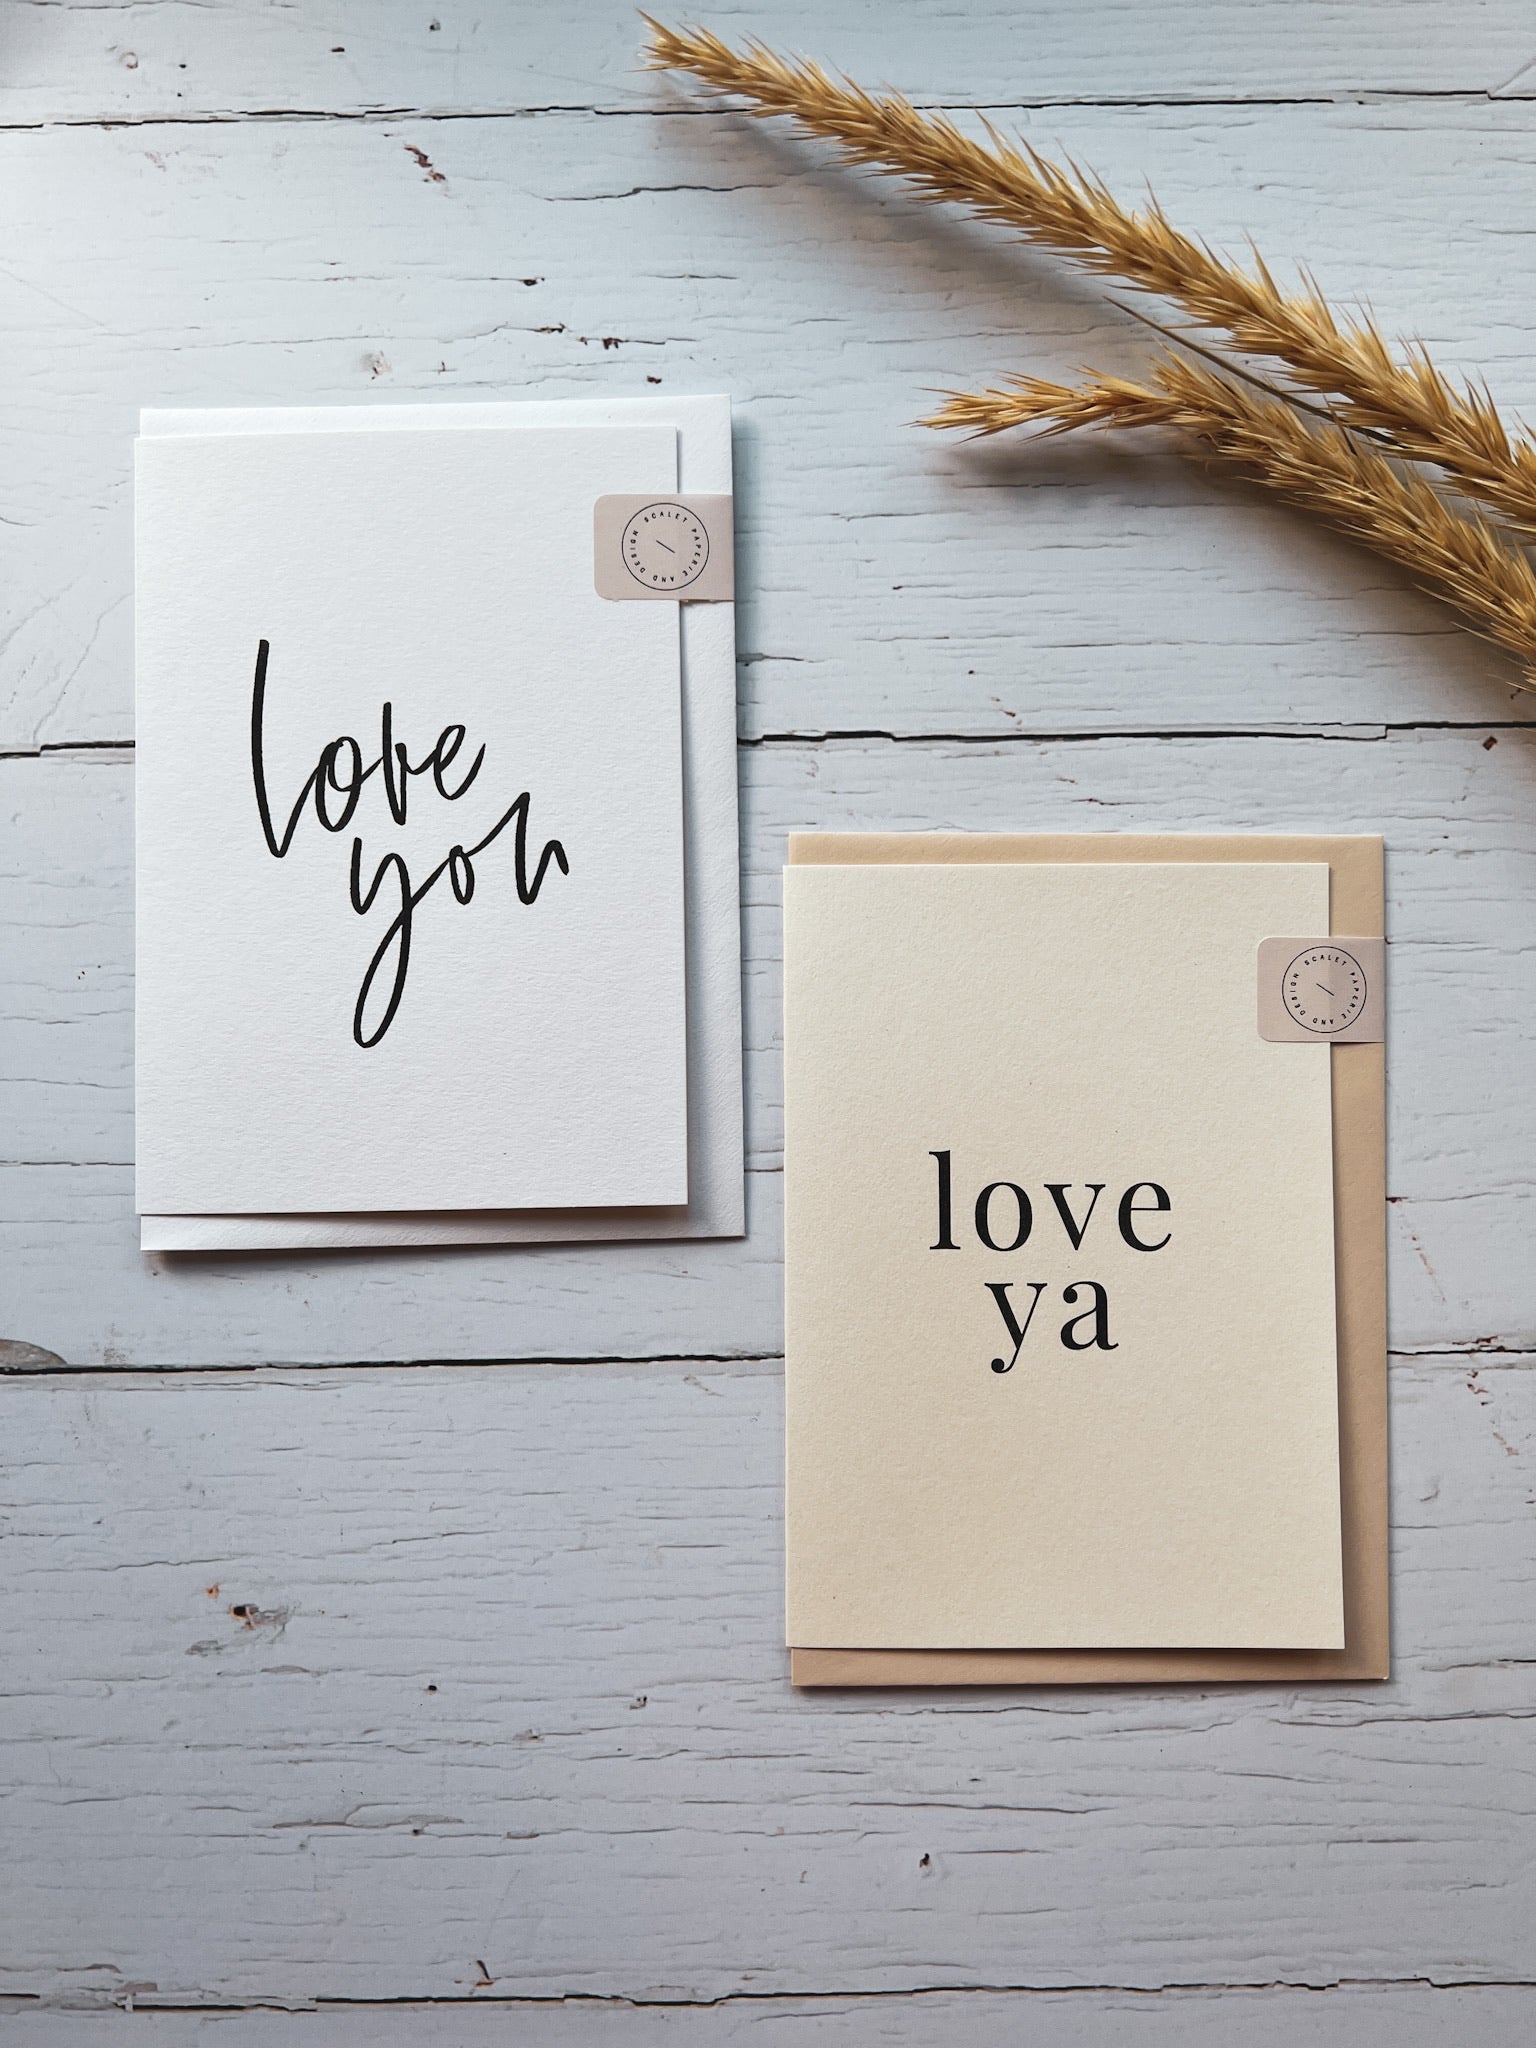 Minimalist Valentine's Cards: Love Ya & Love You - Readymoney Beach Shop